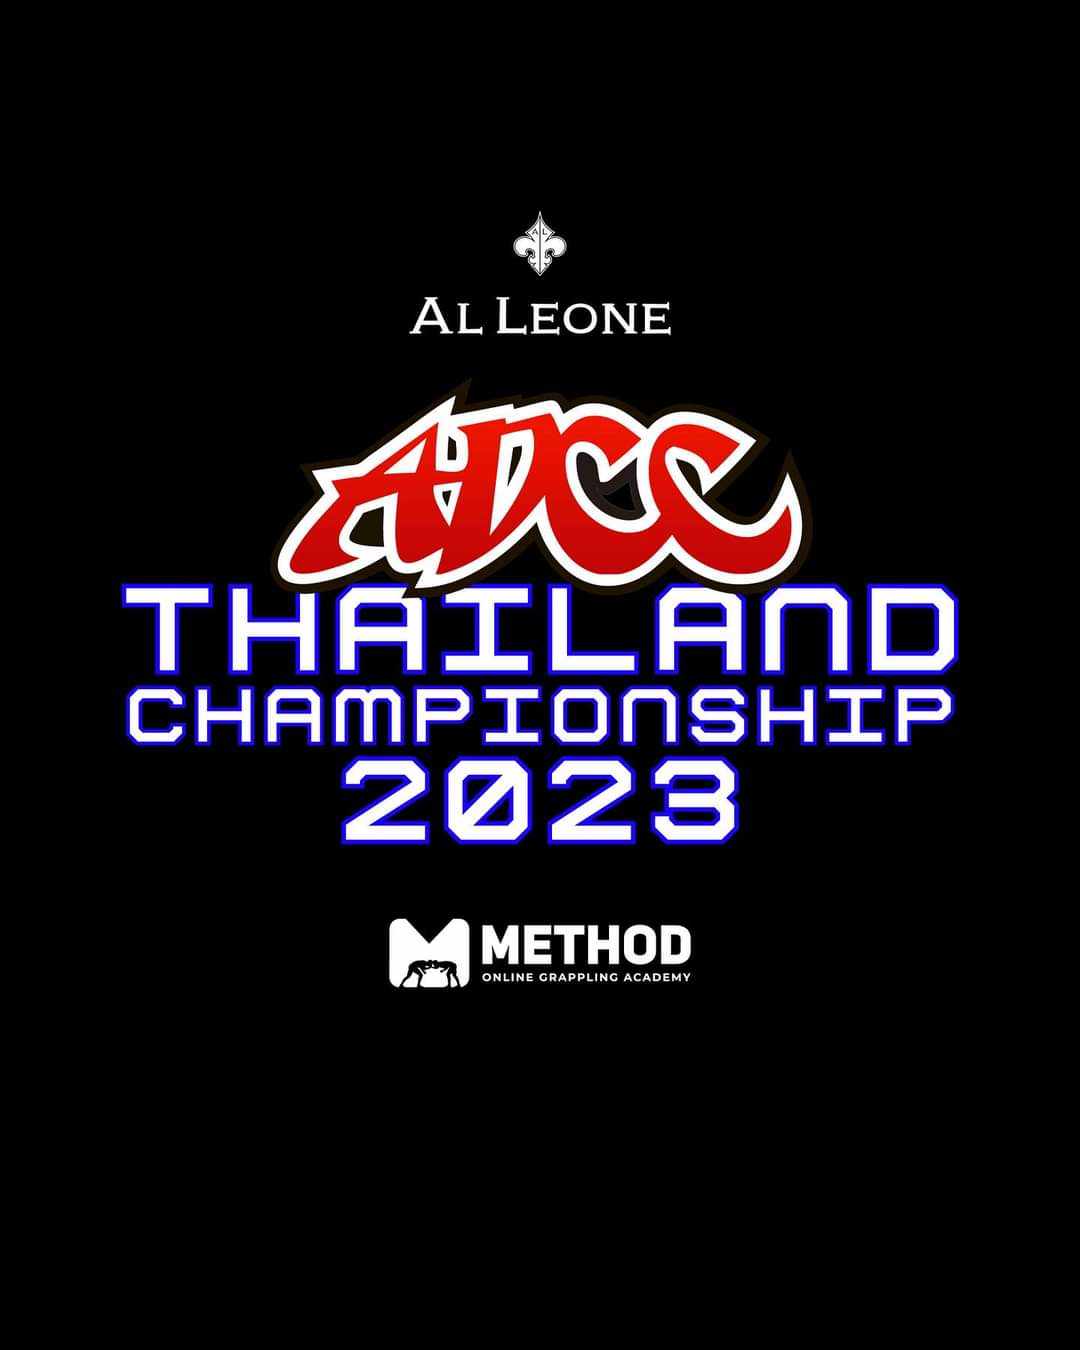 ADCC Thailand Championship